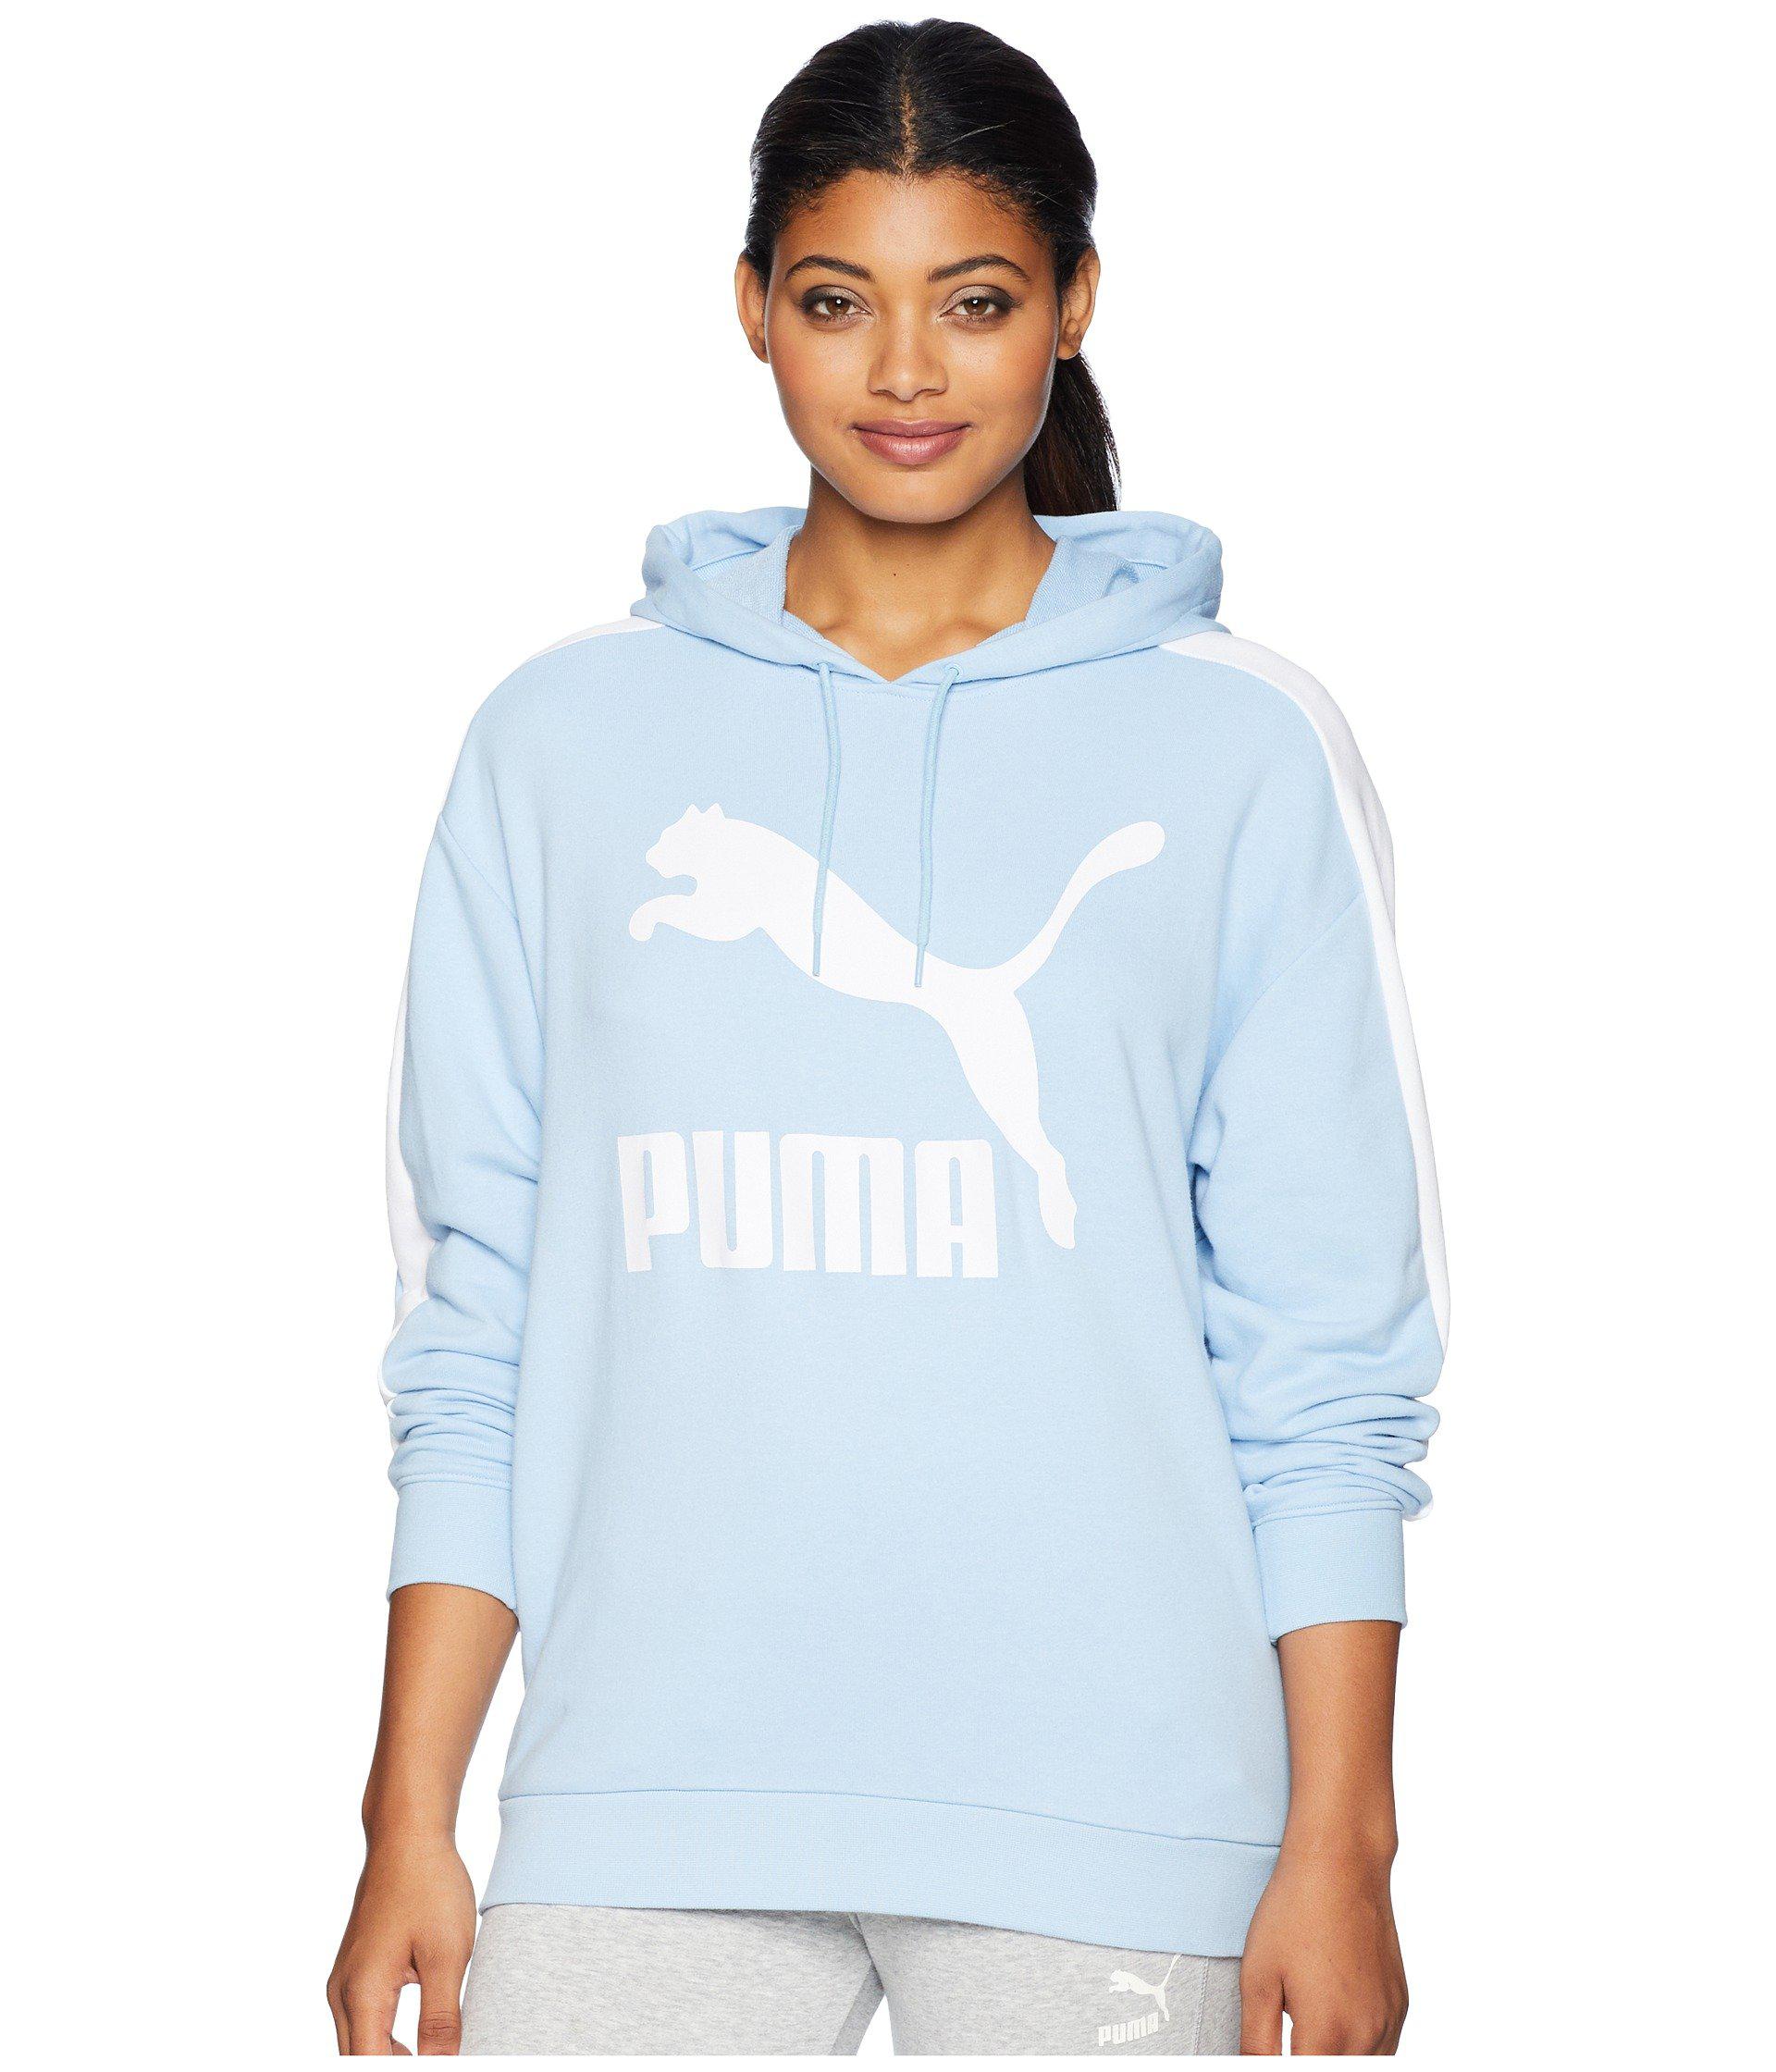 light blue puma hoodie